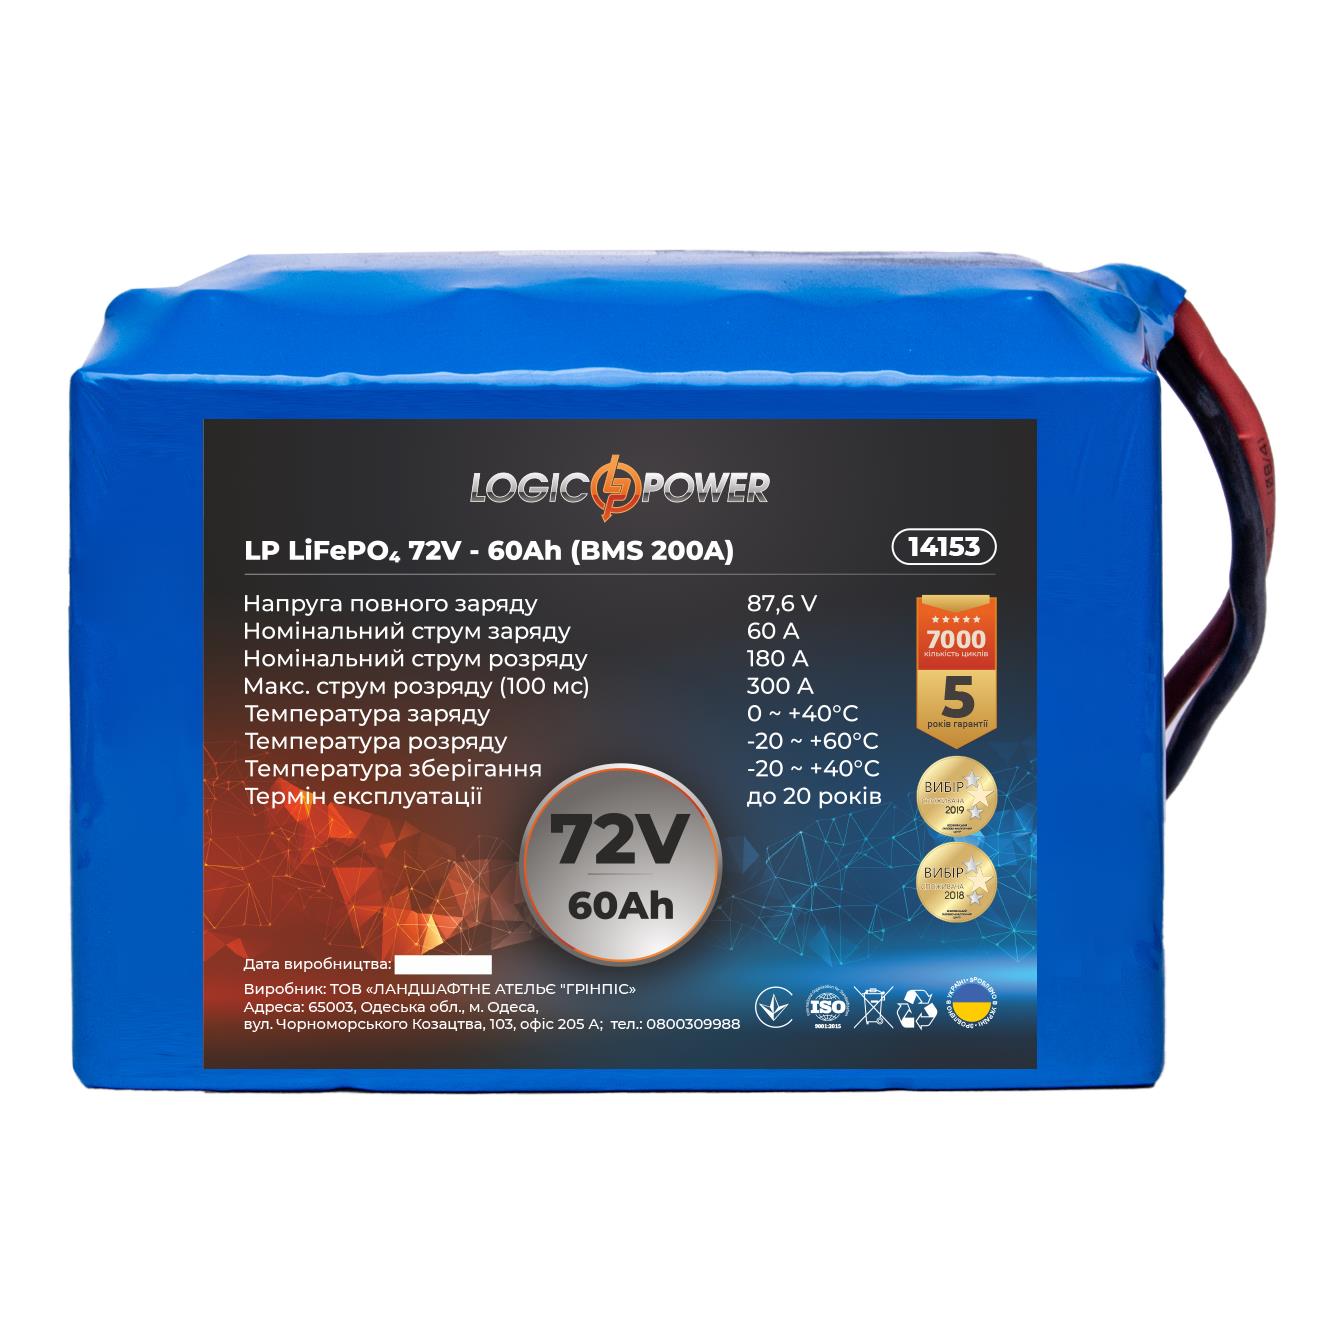 Инструкция аккумулятор литий-железо-фосфатный LogicPower LP LiFePO4 72V - 60 Ah (BMS 200A) (14153)